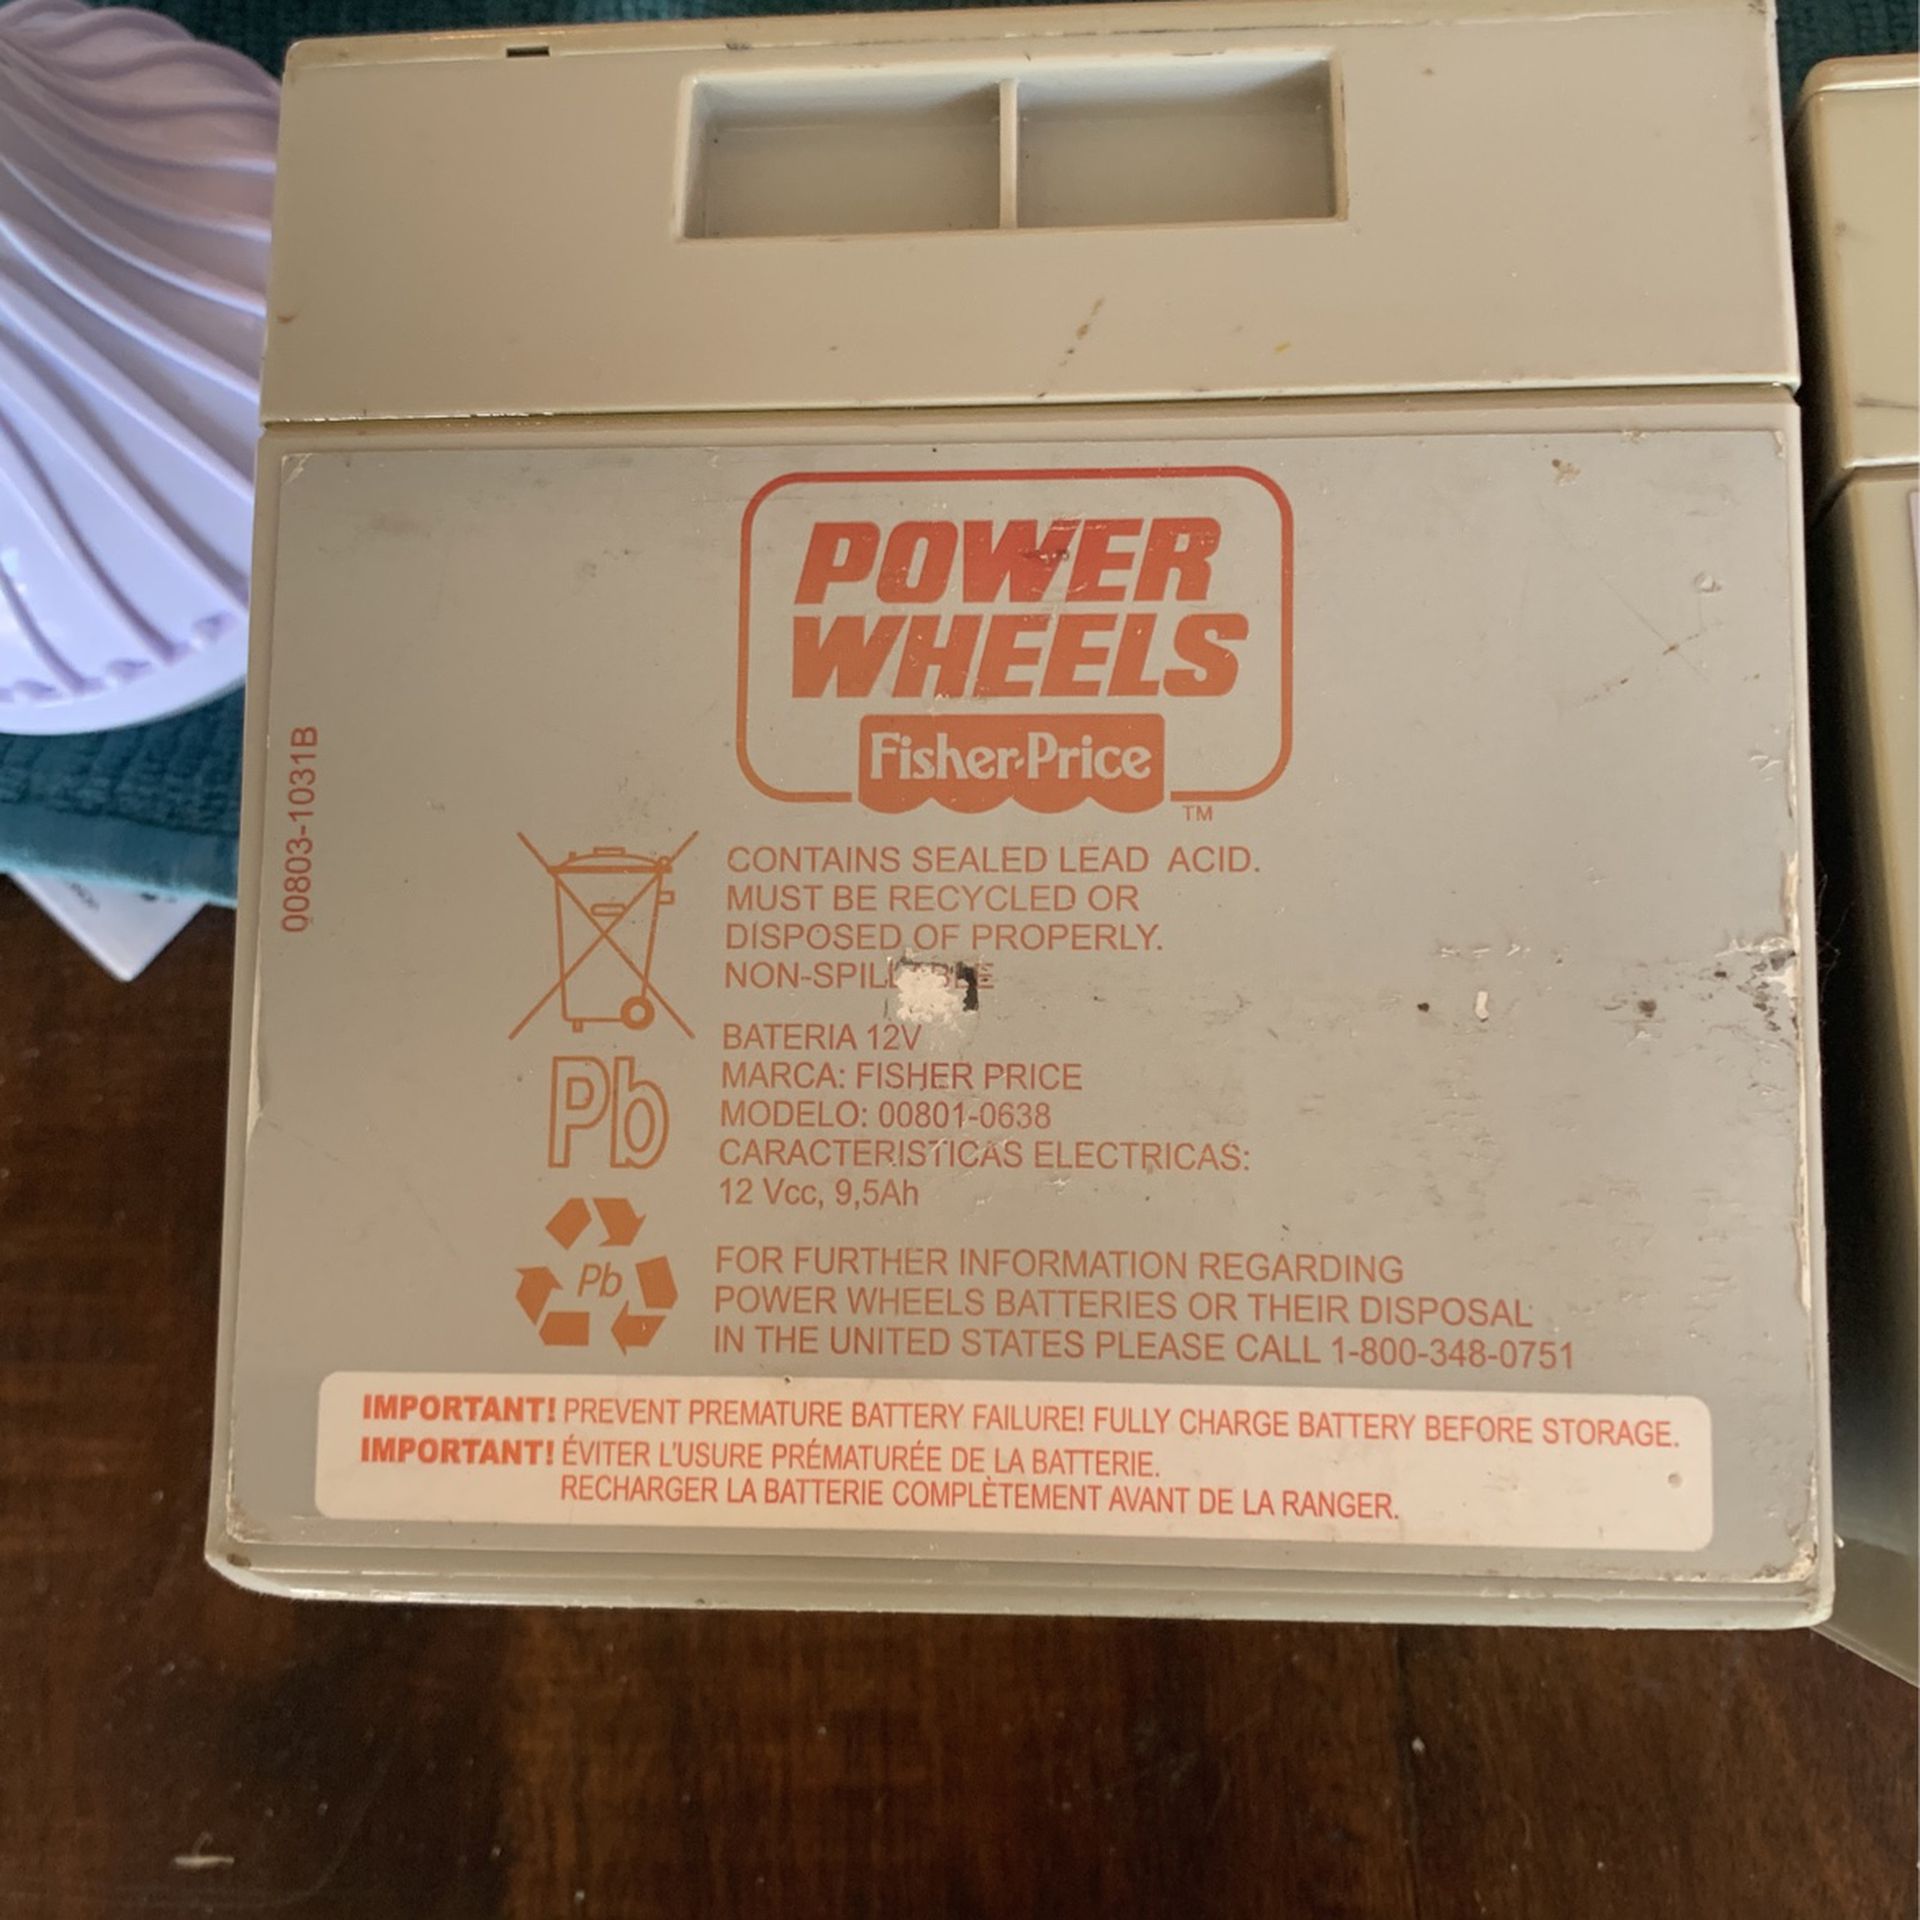 Power Wheels Batteries